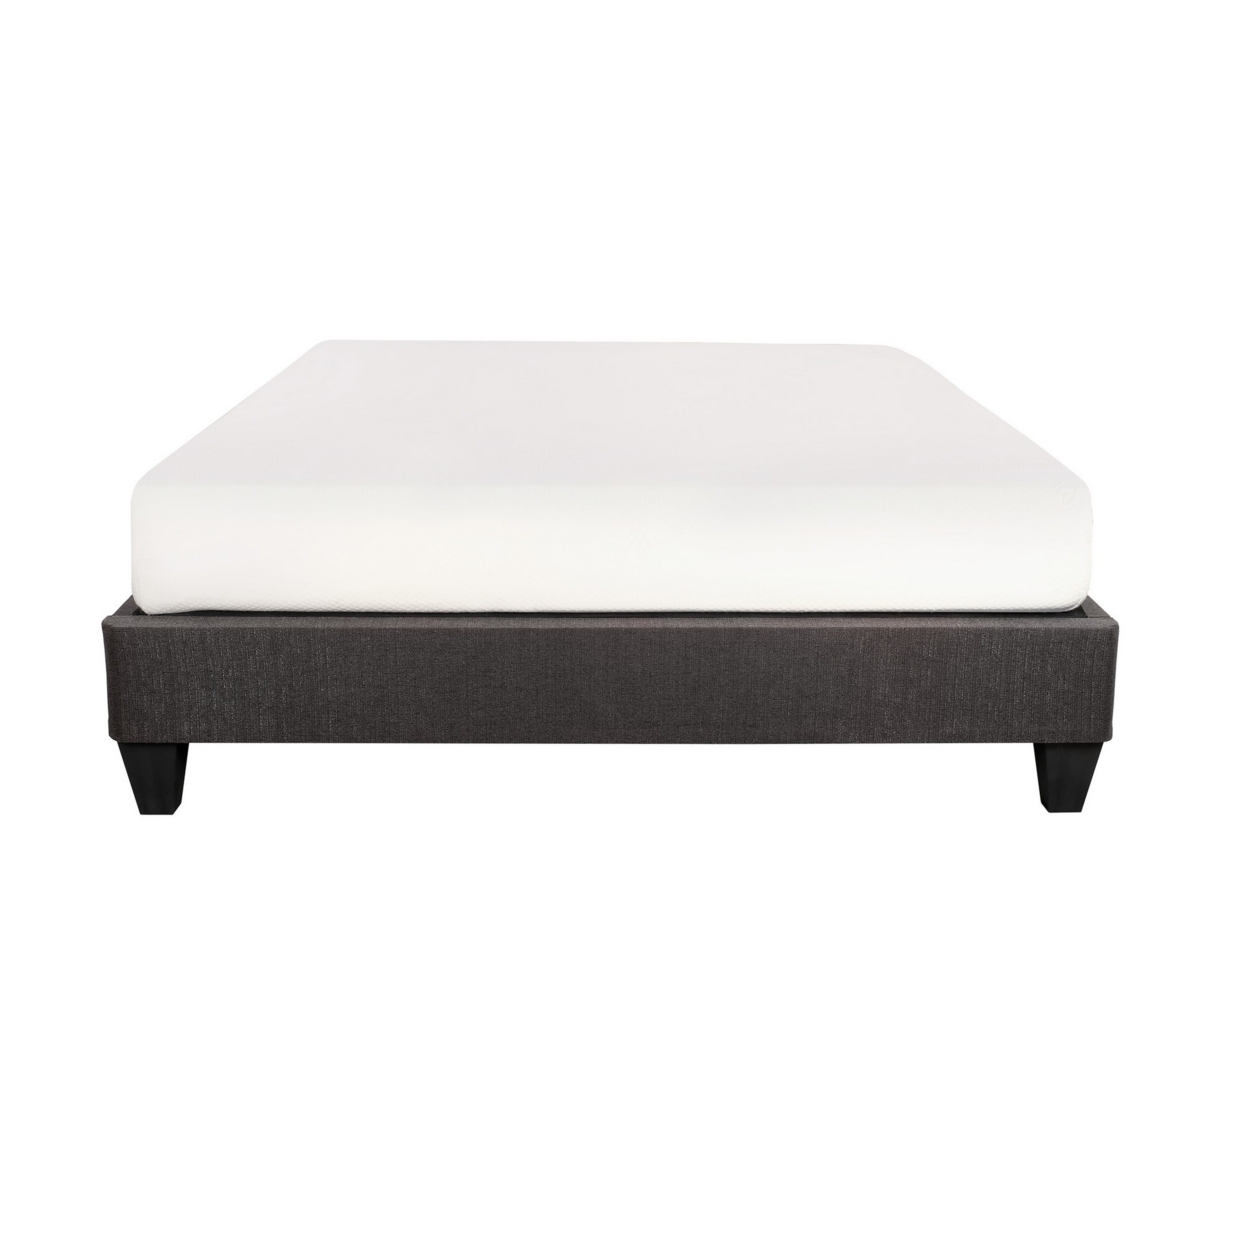 Tamy California King Size Platform Bed Frame, Dark Gray Linen Upholstery- Saltoro Sherpi